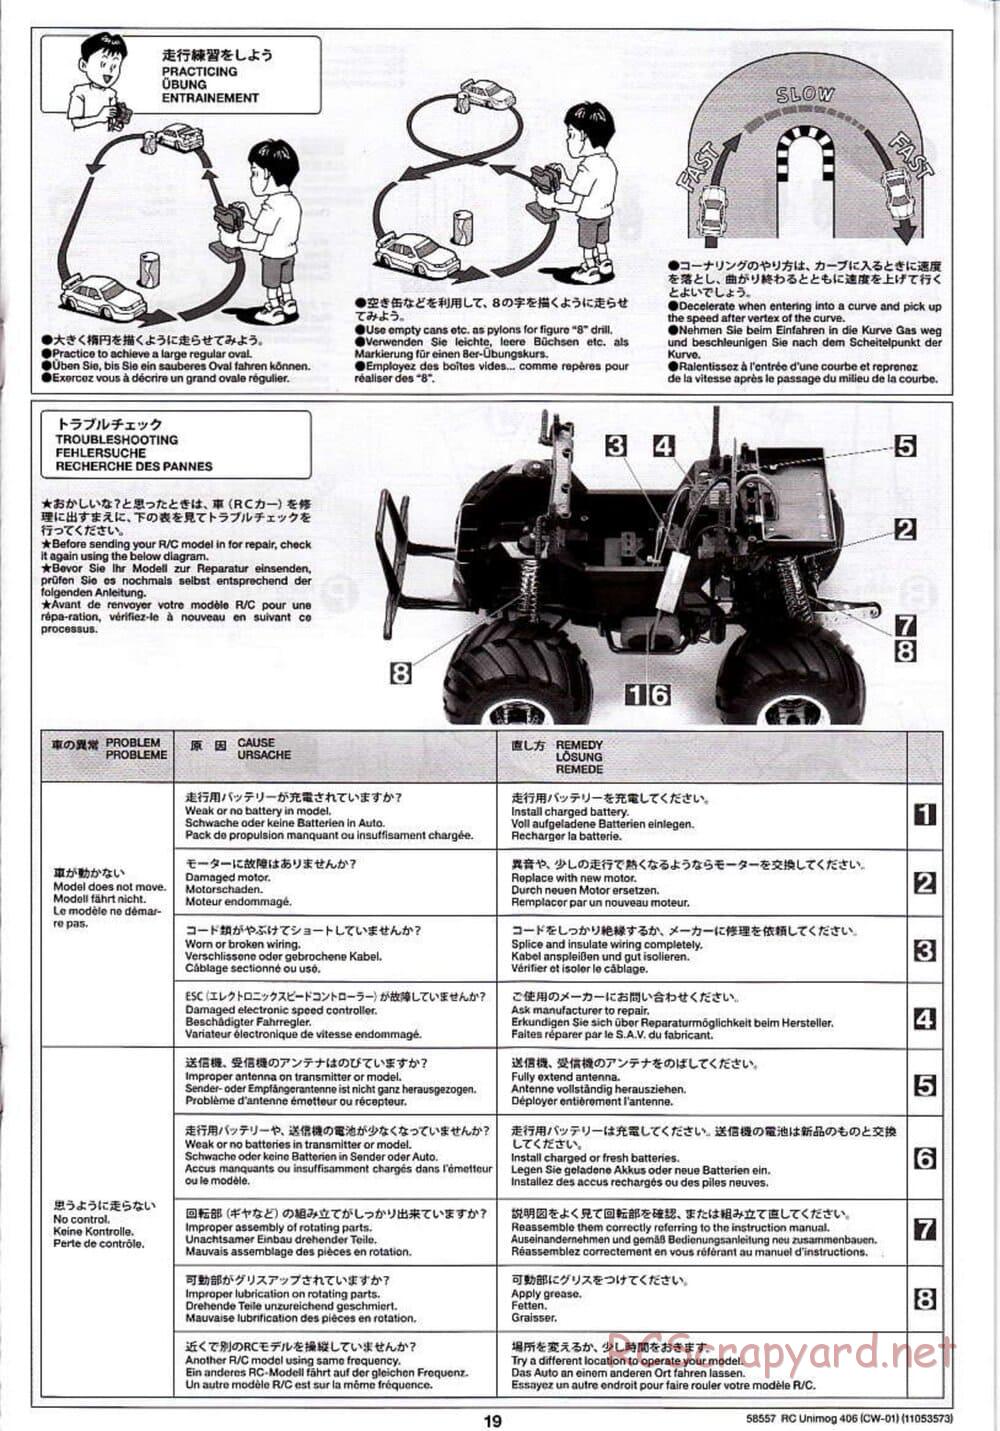 Tamiya - Mercedes-Benz Unimog 406 Series U900 - CW-01 Chassis - Manual - Page 19